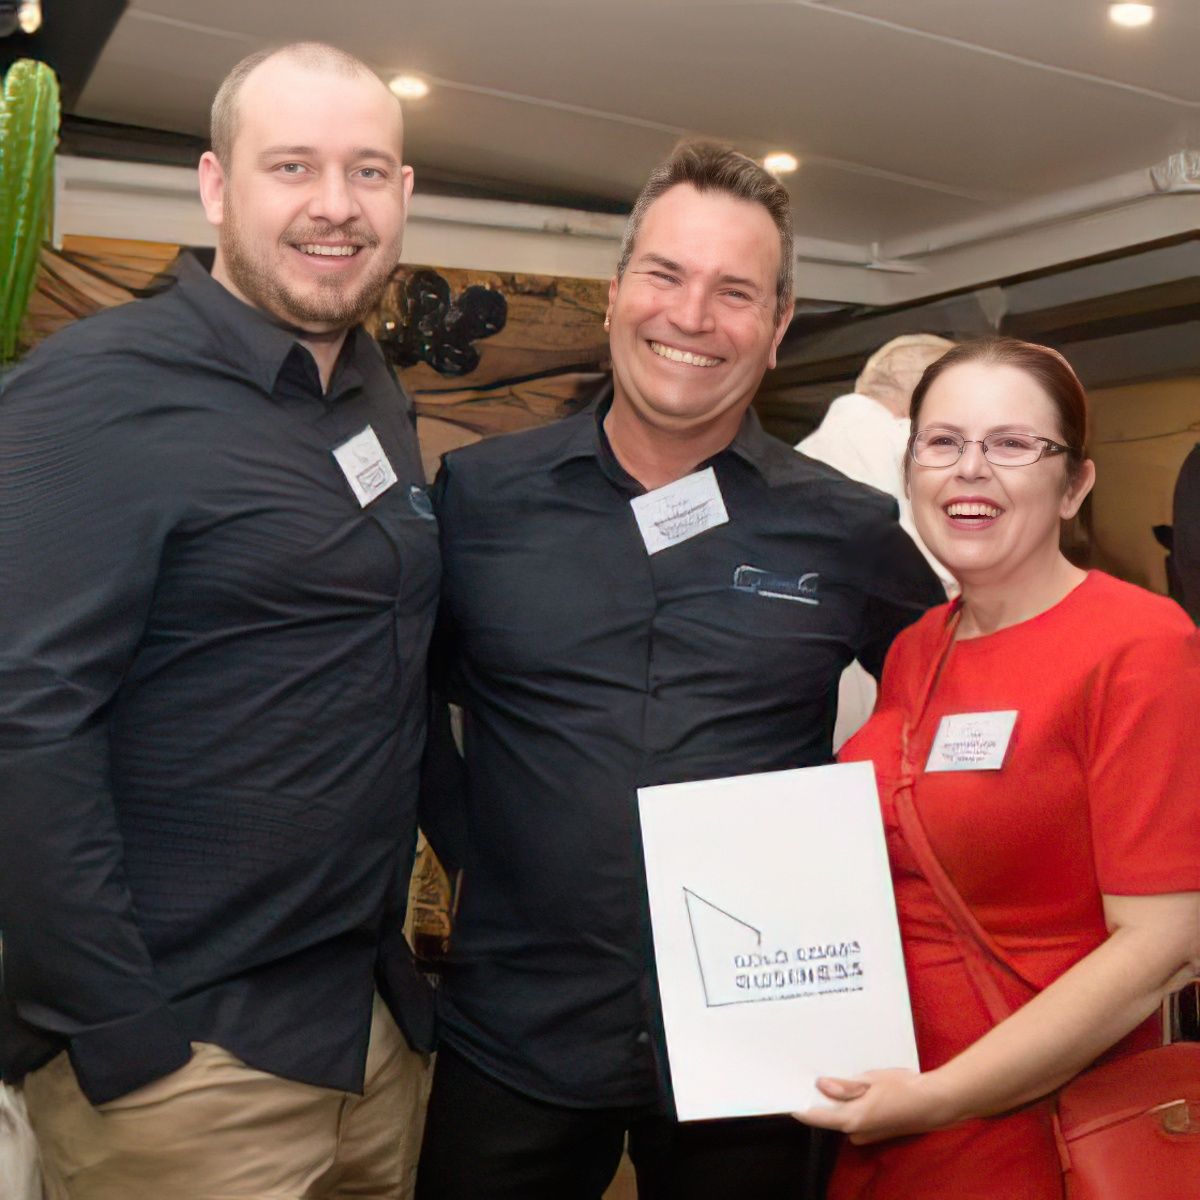 Blake, Brad and Kaleena with our Gold Coast Business Award